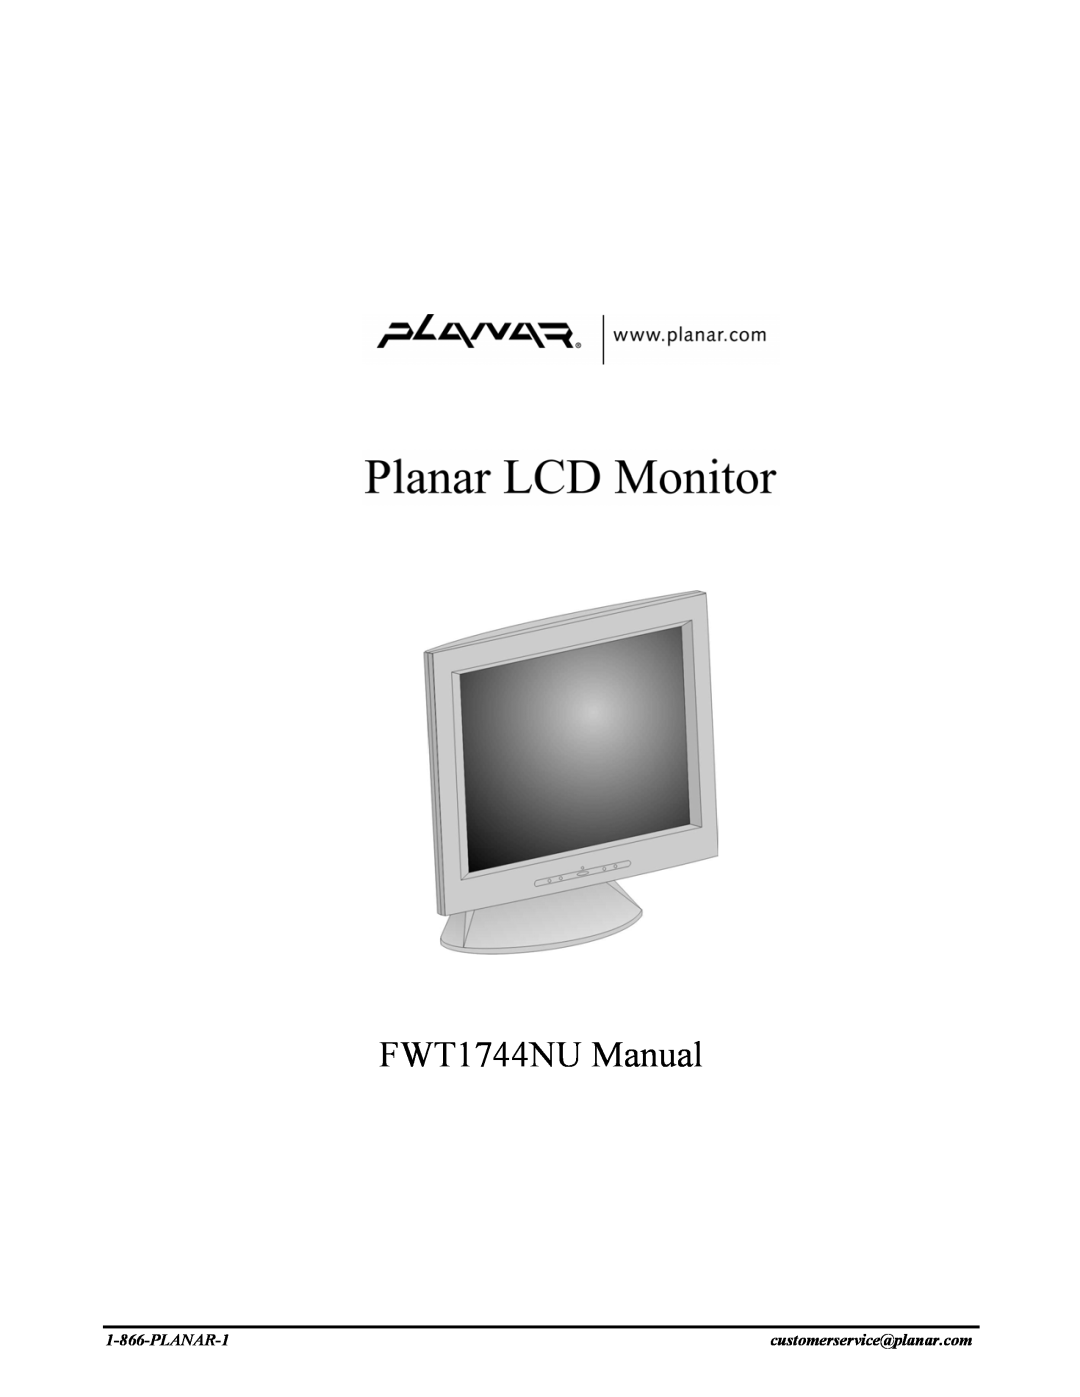 Planar manual FWT1744NU Manual, PLANAR-1, customerservice@planar.com 